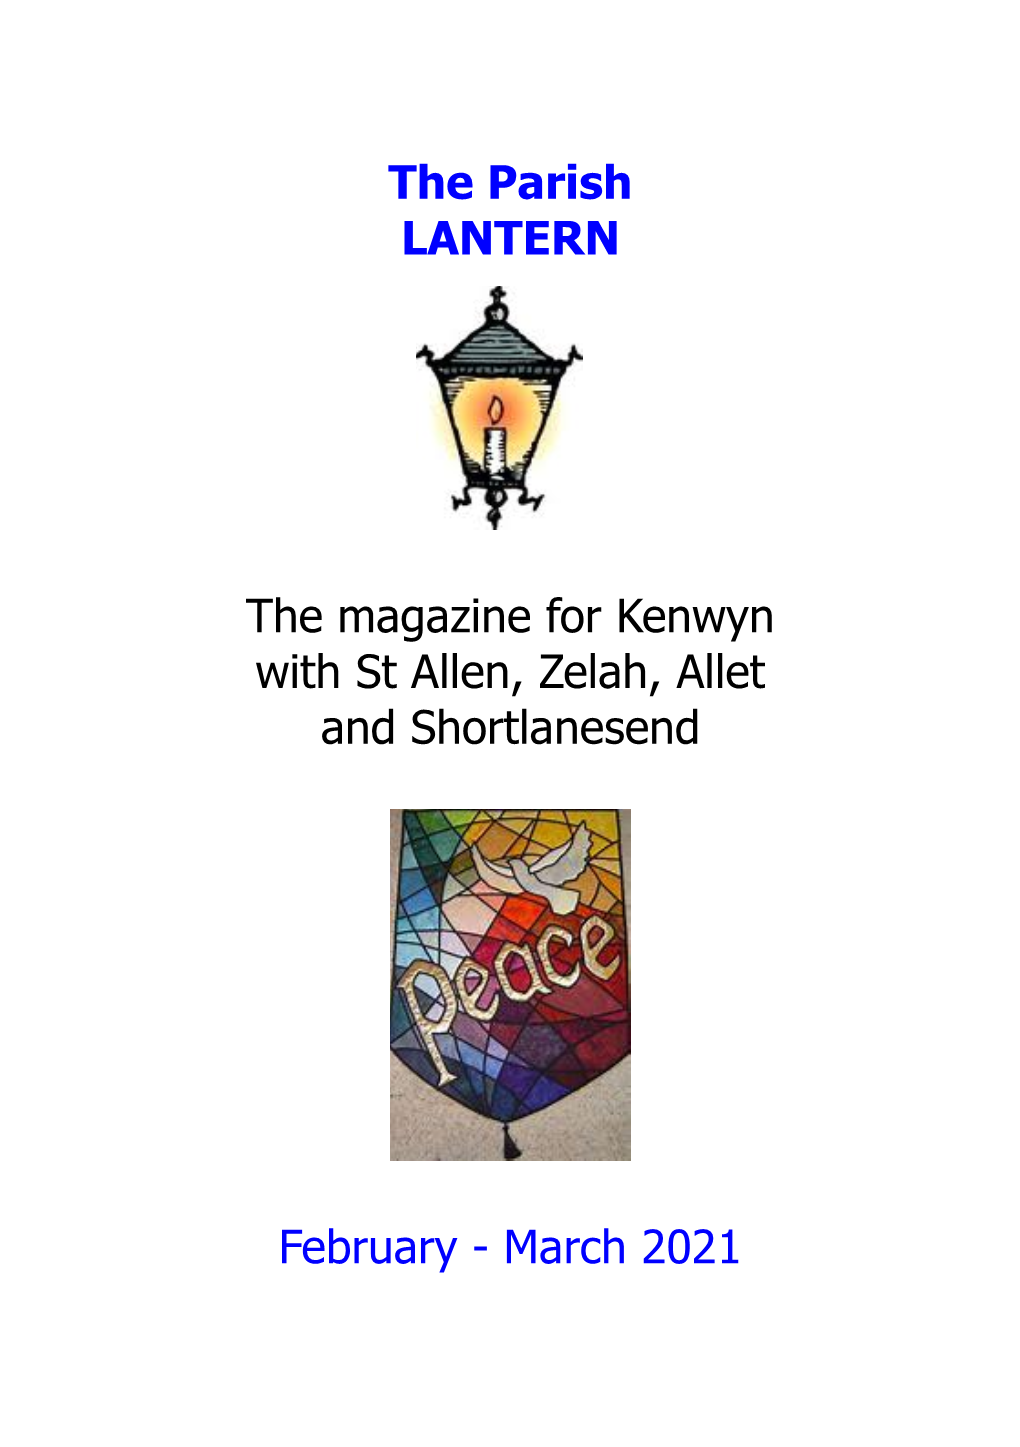 The Parish LANTERN the Magazine for Kenwyn with St Allen, Zelah